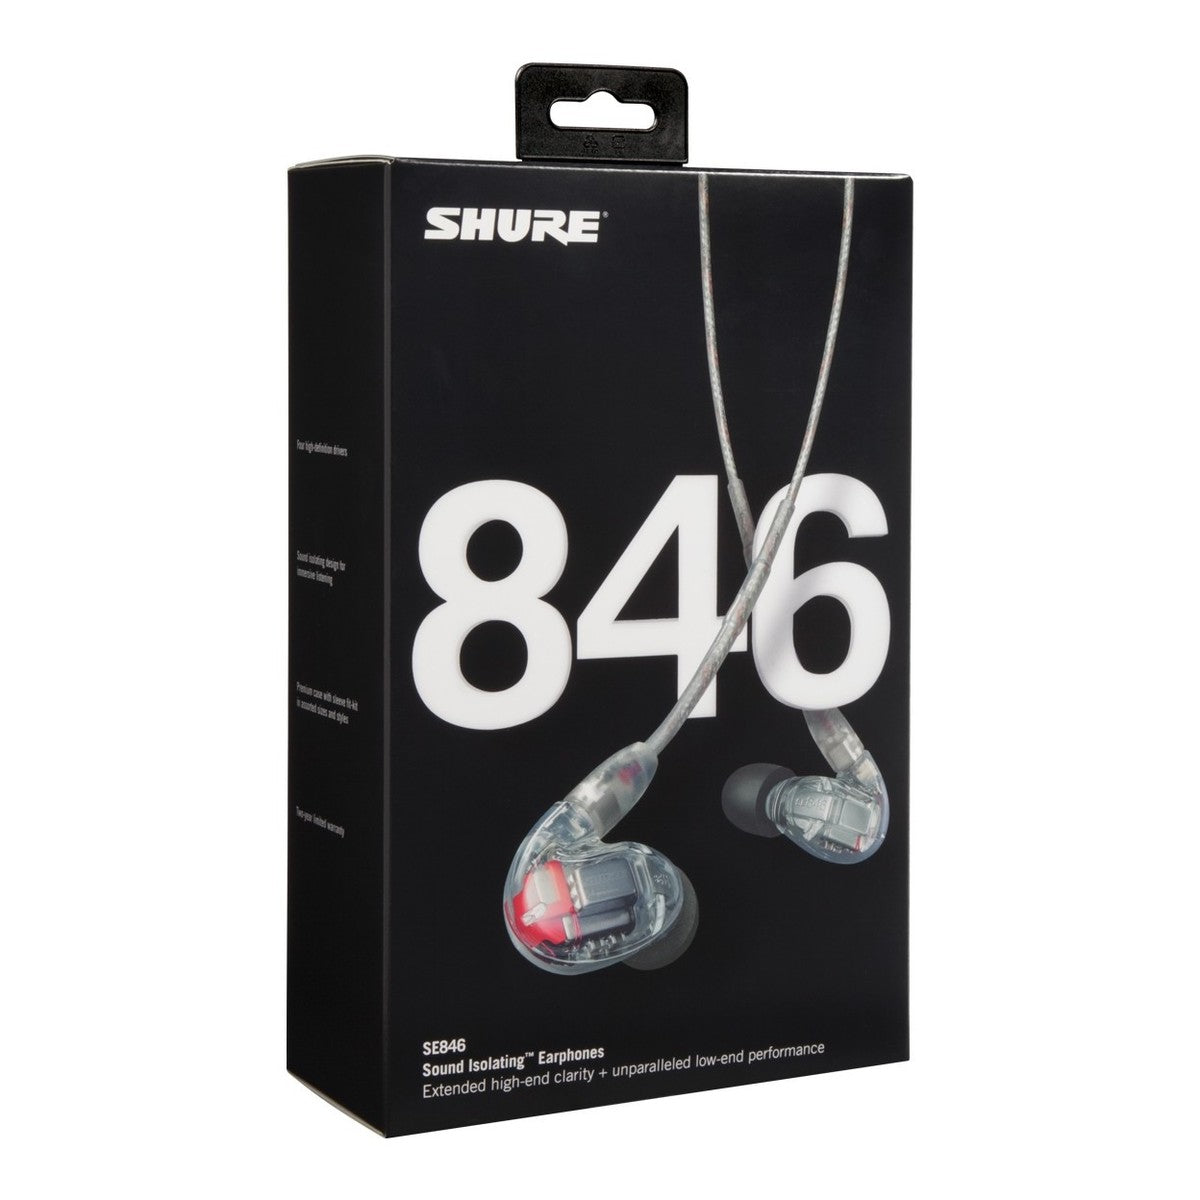 Shure SE846 Pro Sound Isolating Earphones